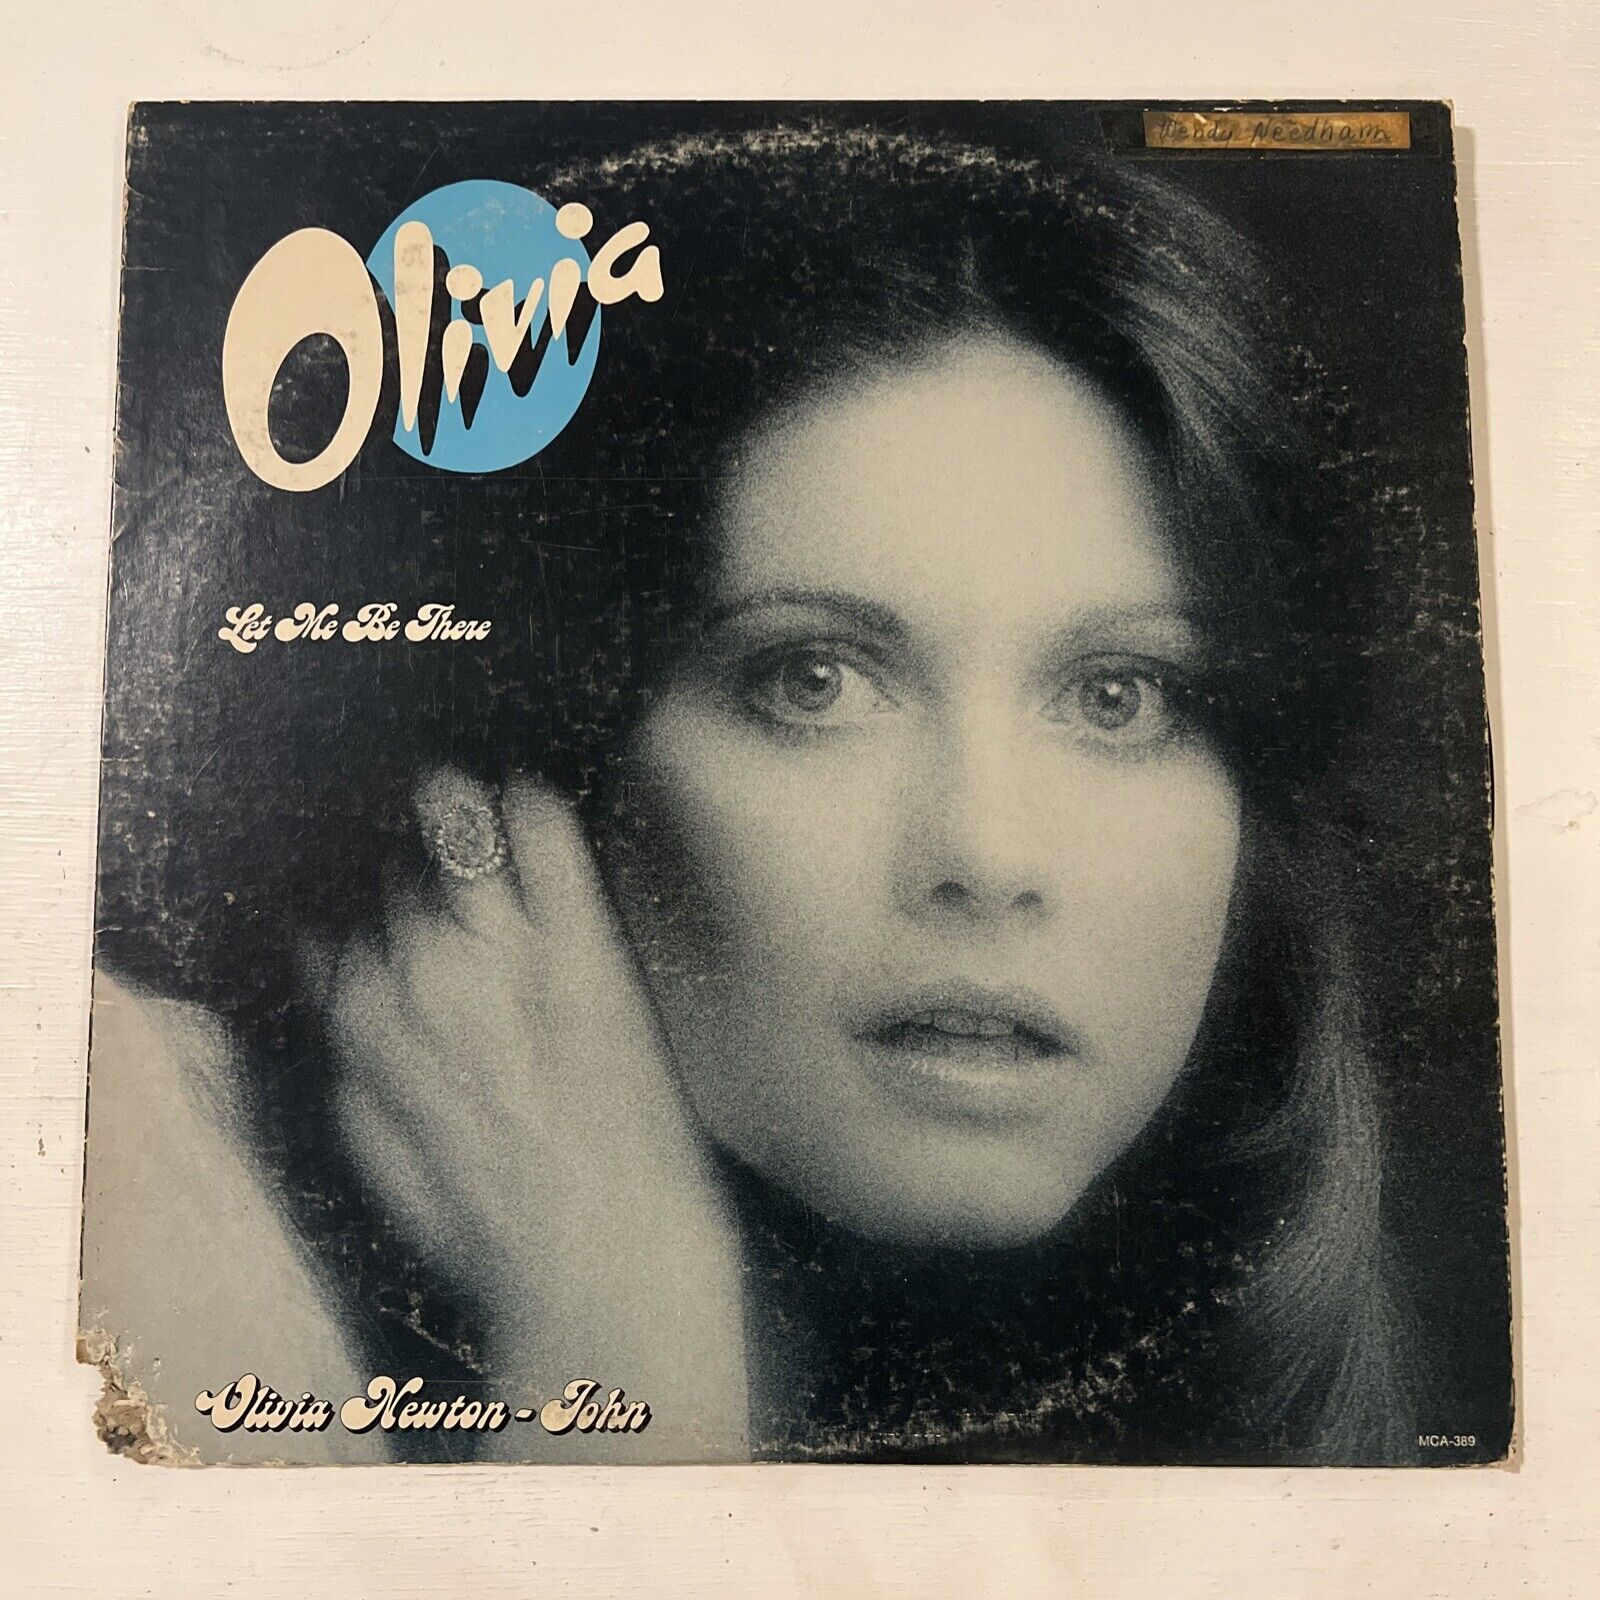 OLIVIA NEWTON JOHN LET ME BE THERE  1973 MCA-389 LP VINYL  G+/VG+